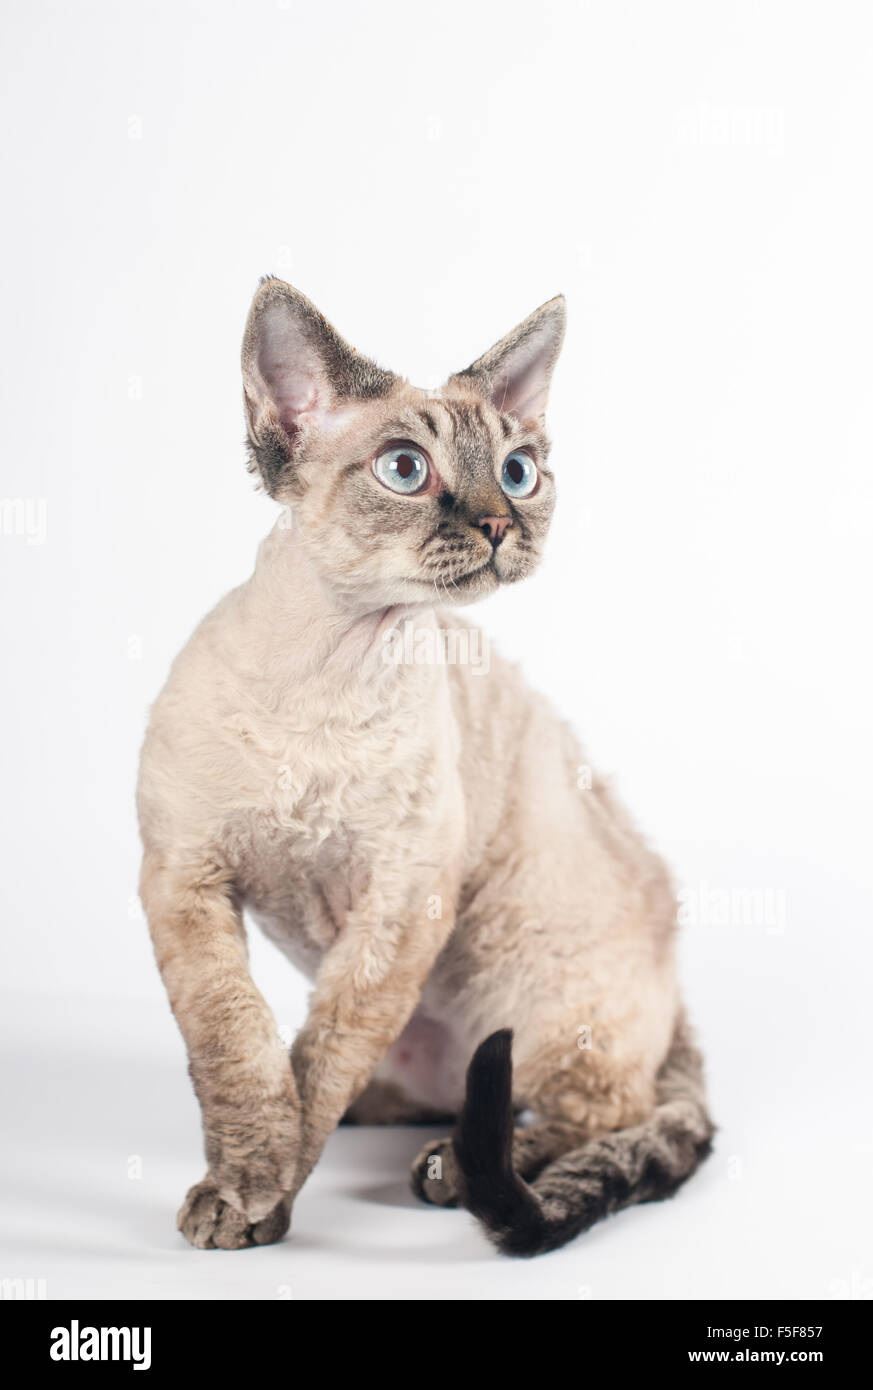 Devon rex cat on white background Stock Photo